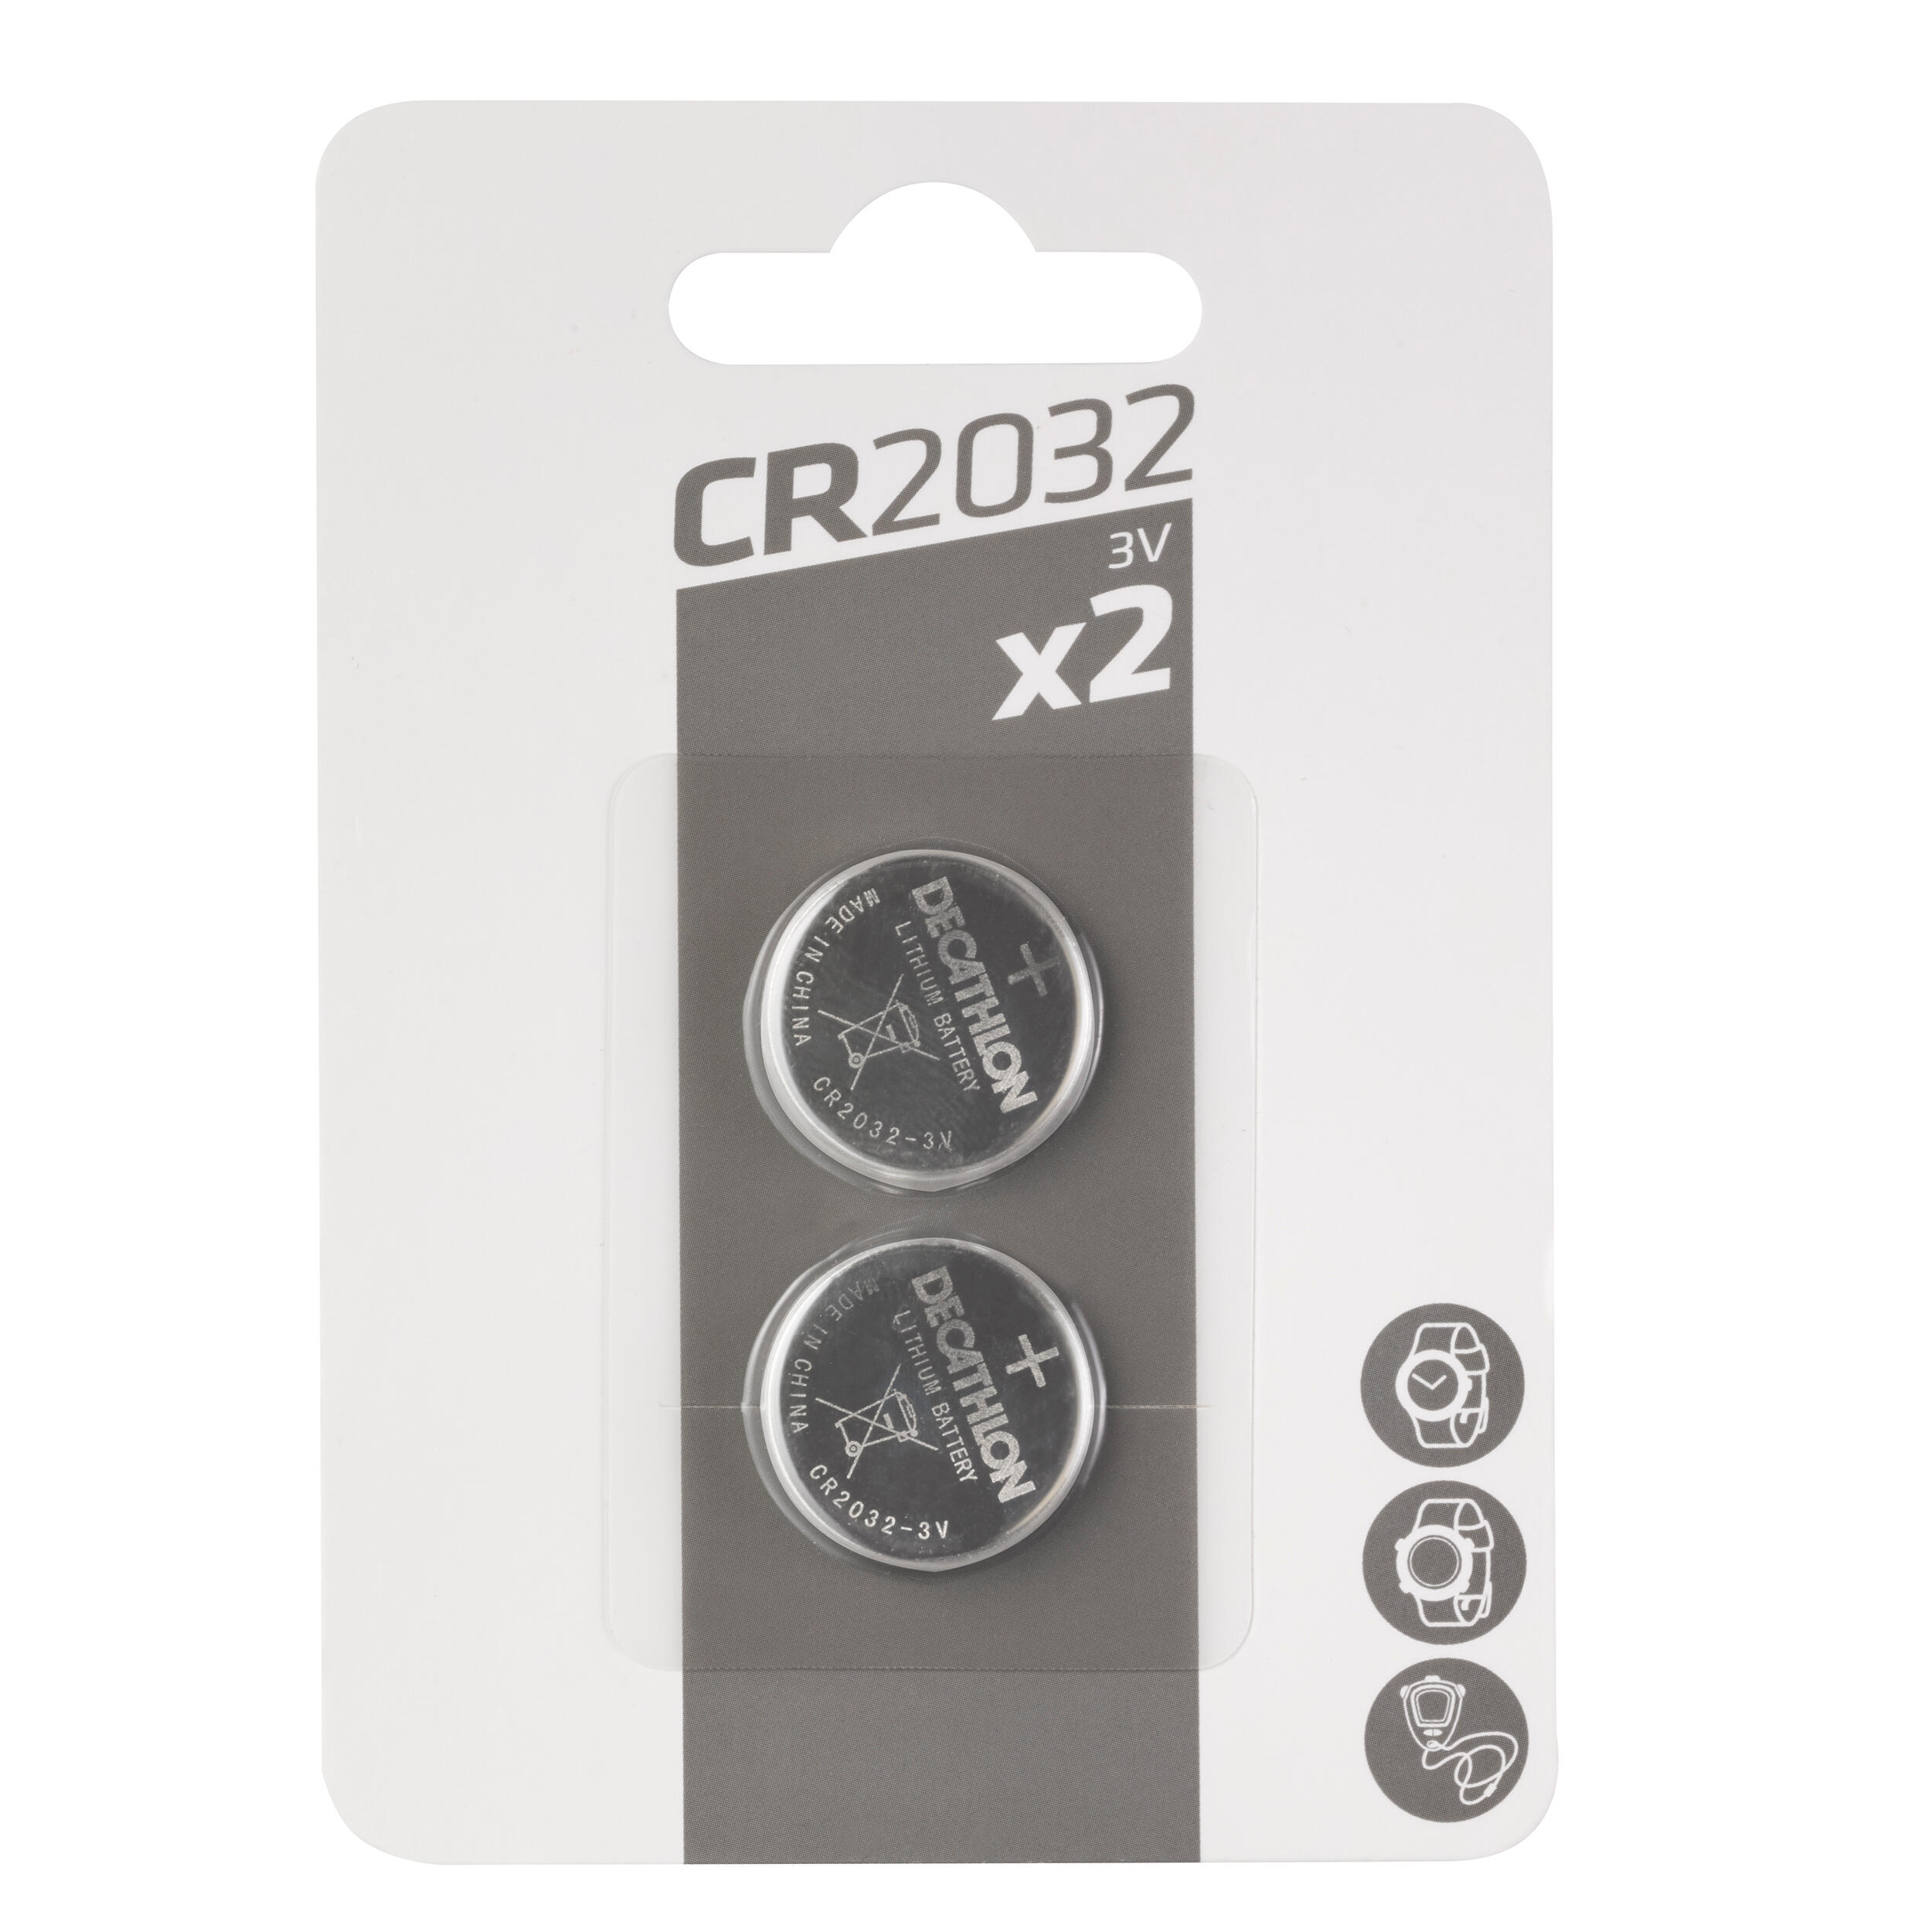 Baterii CR2032 x 2 imagine